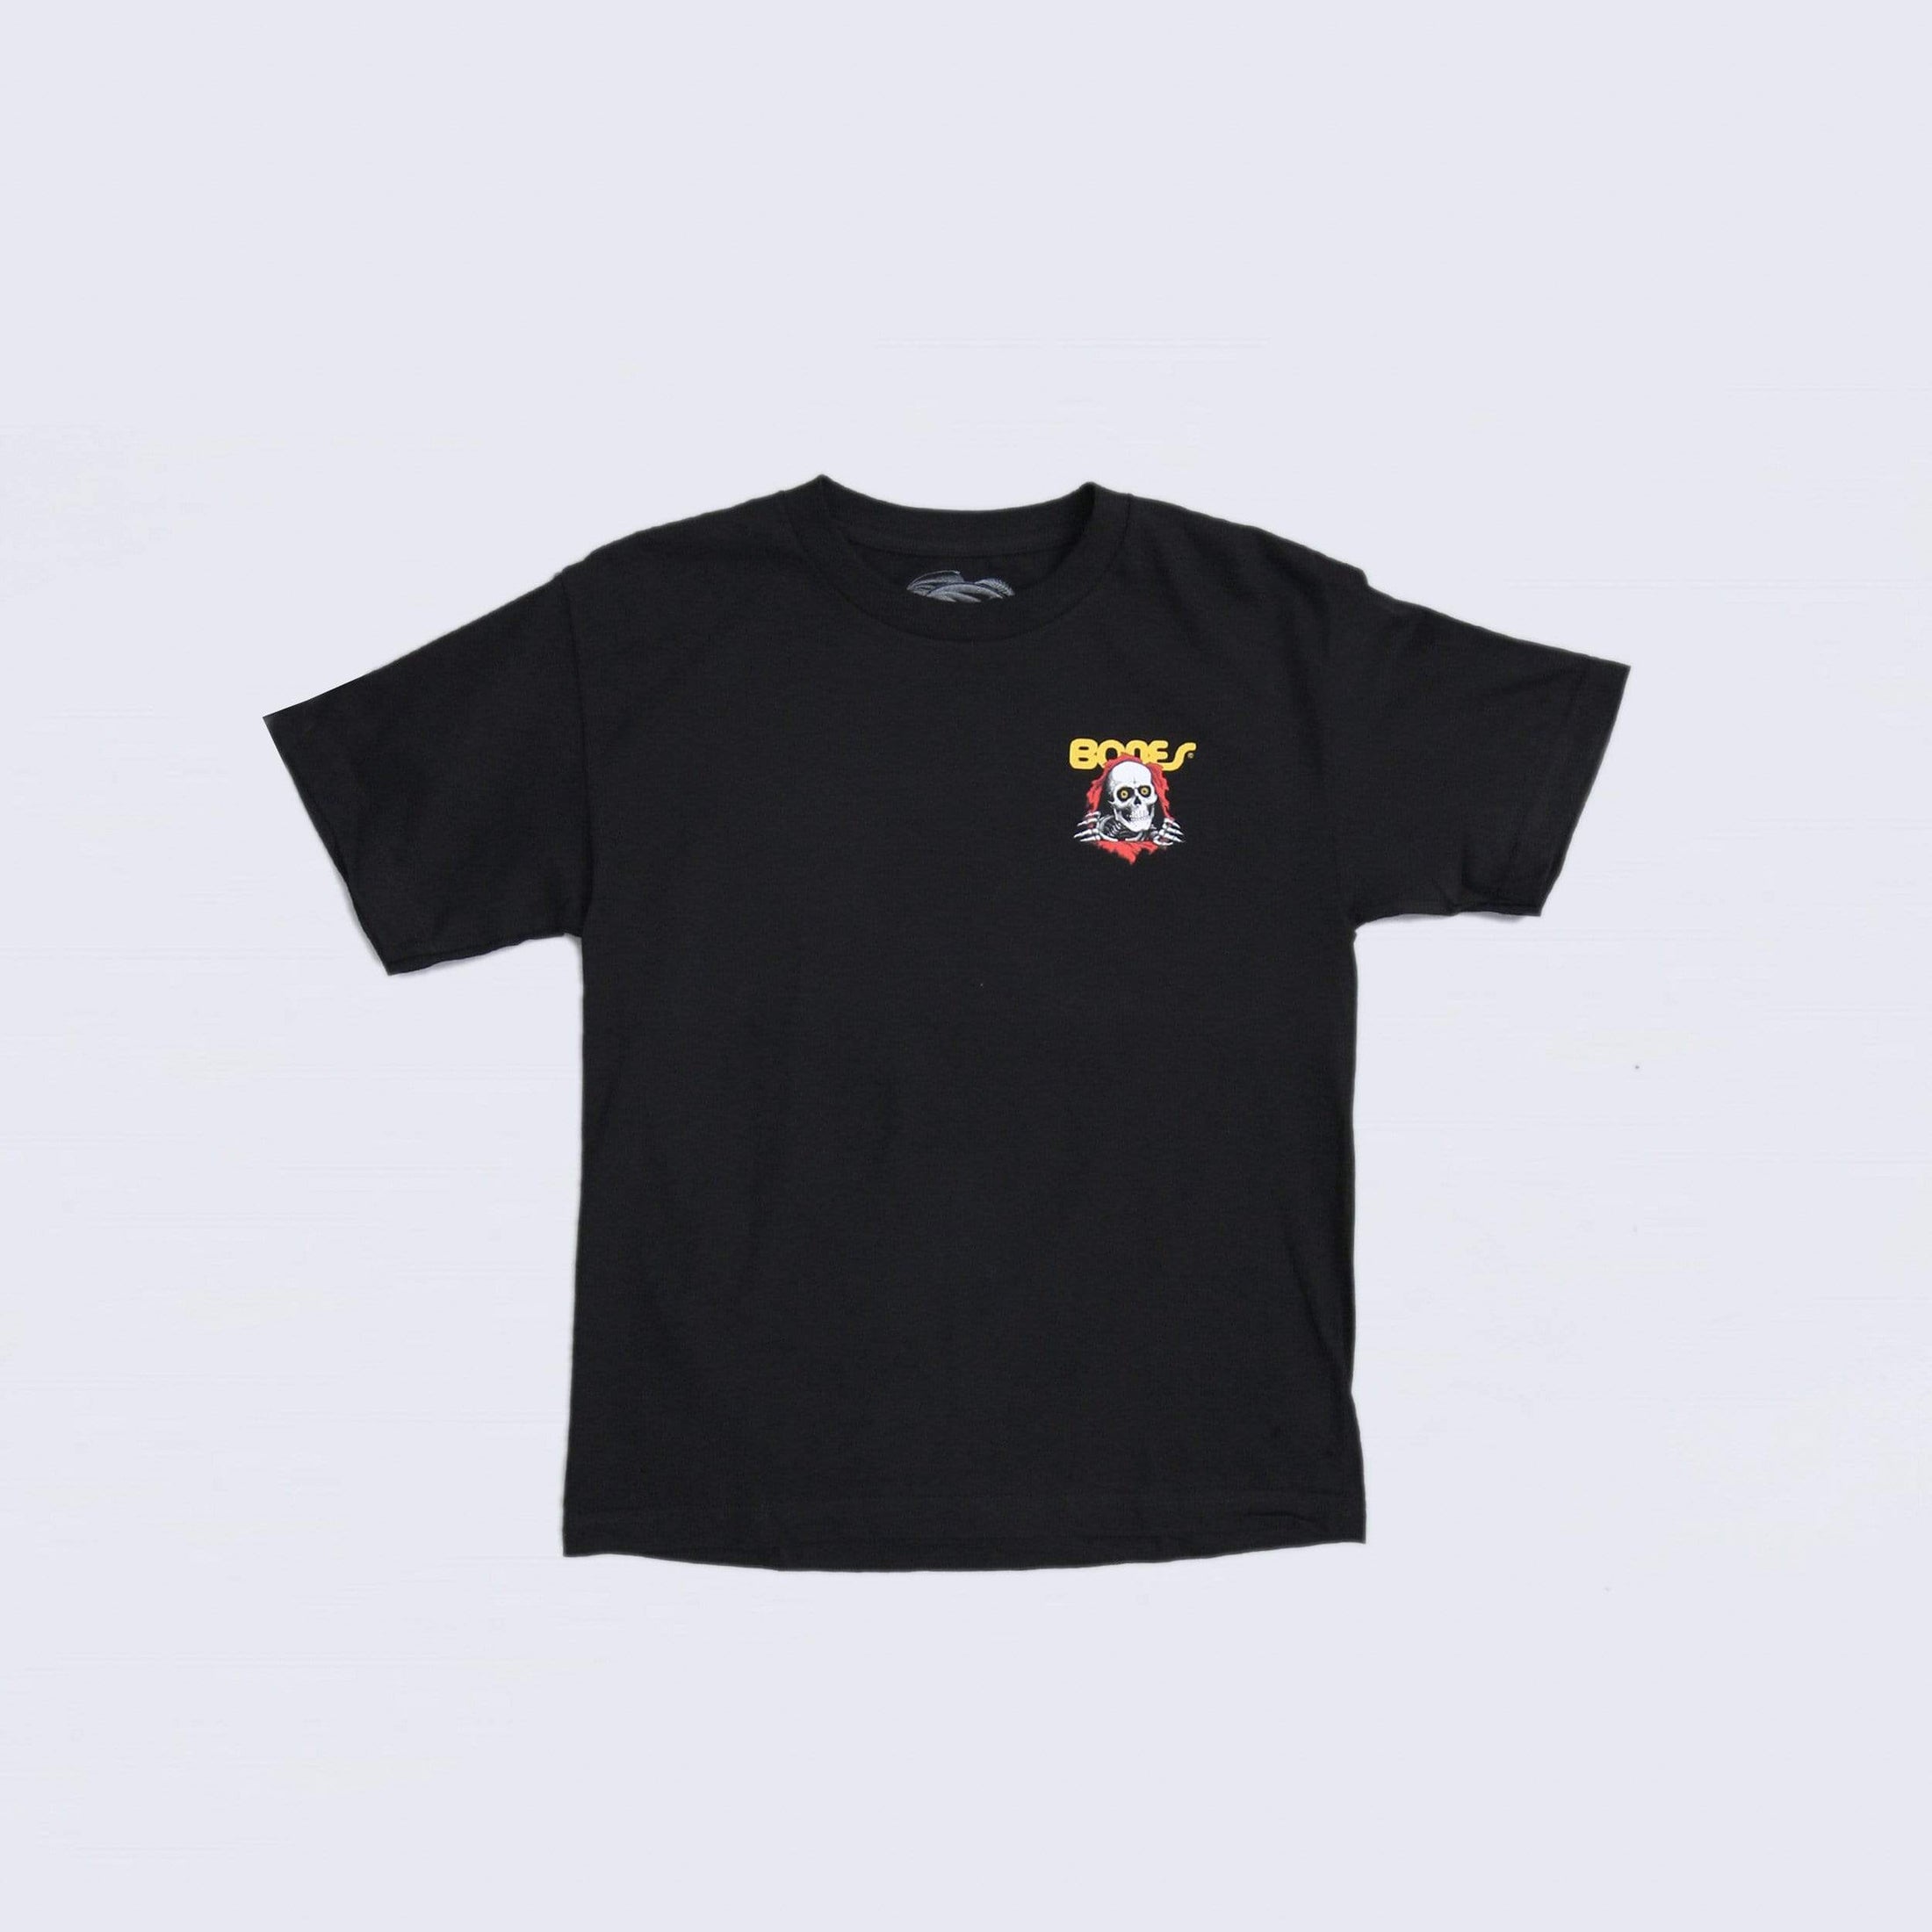 Powell Peralta Ripper Youth T-Shirt Black